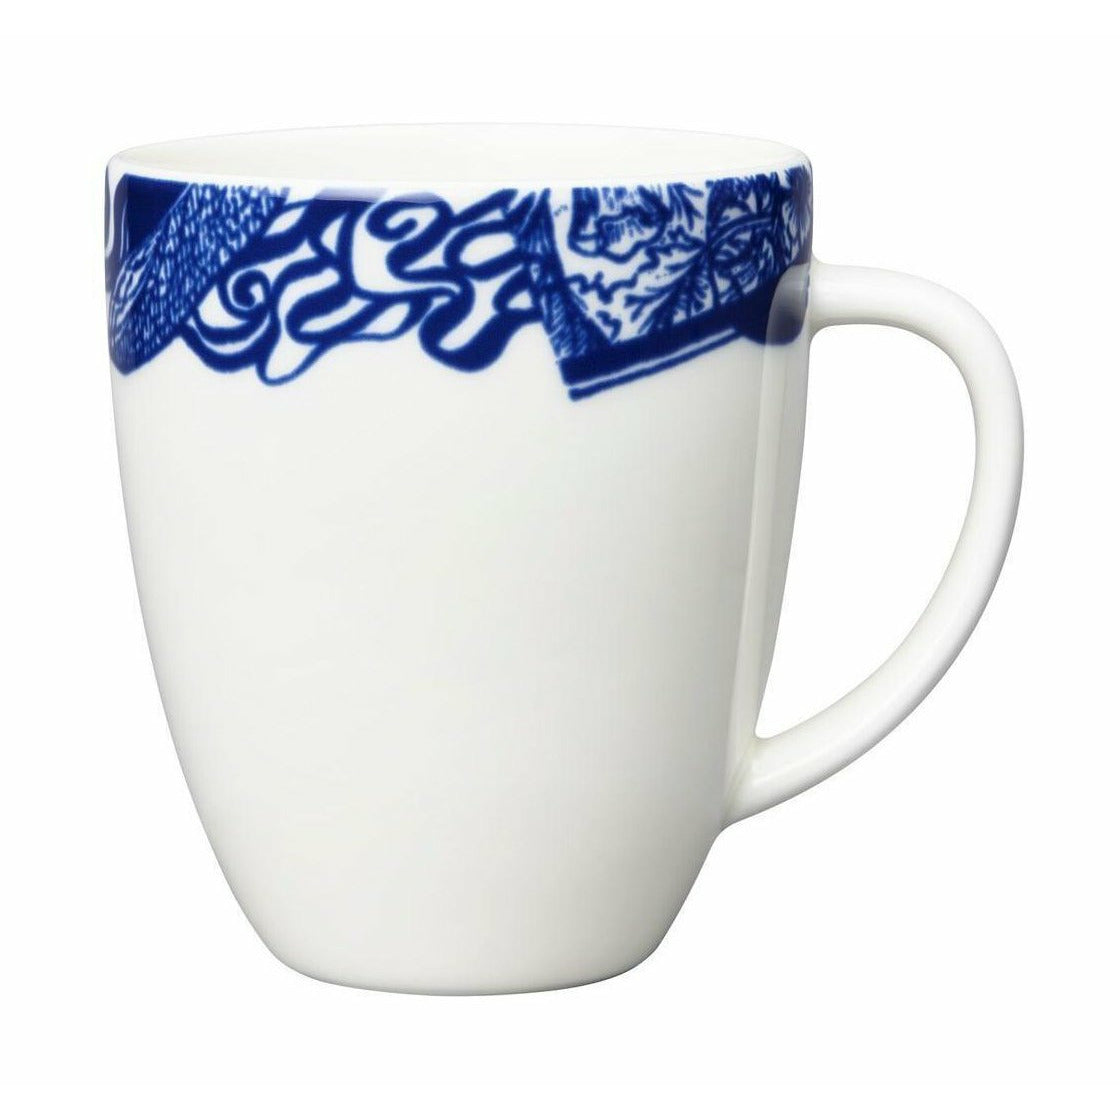 Arabie pastoraali vase 13 cm, blanc / bleu